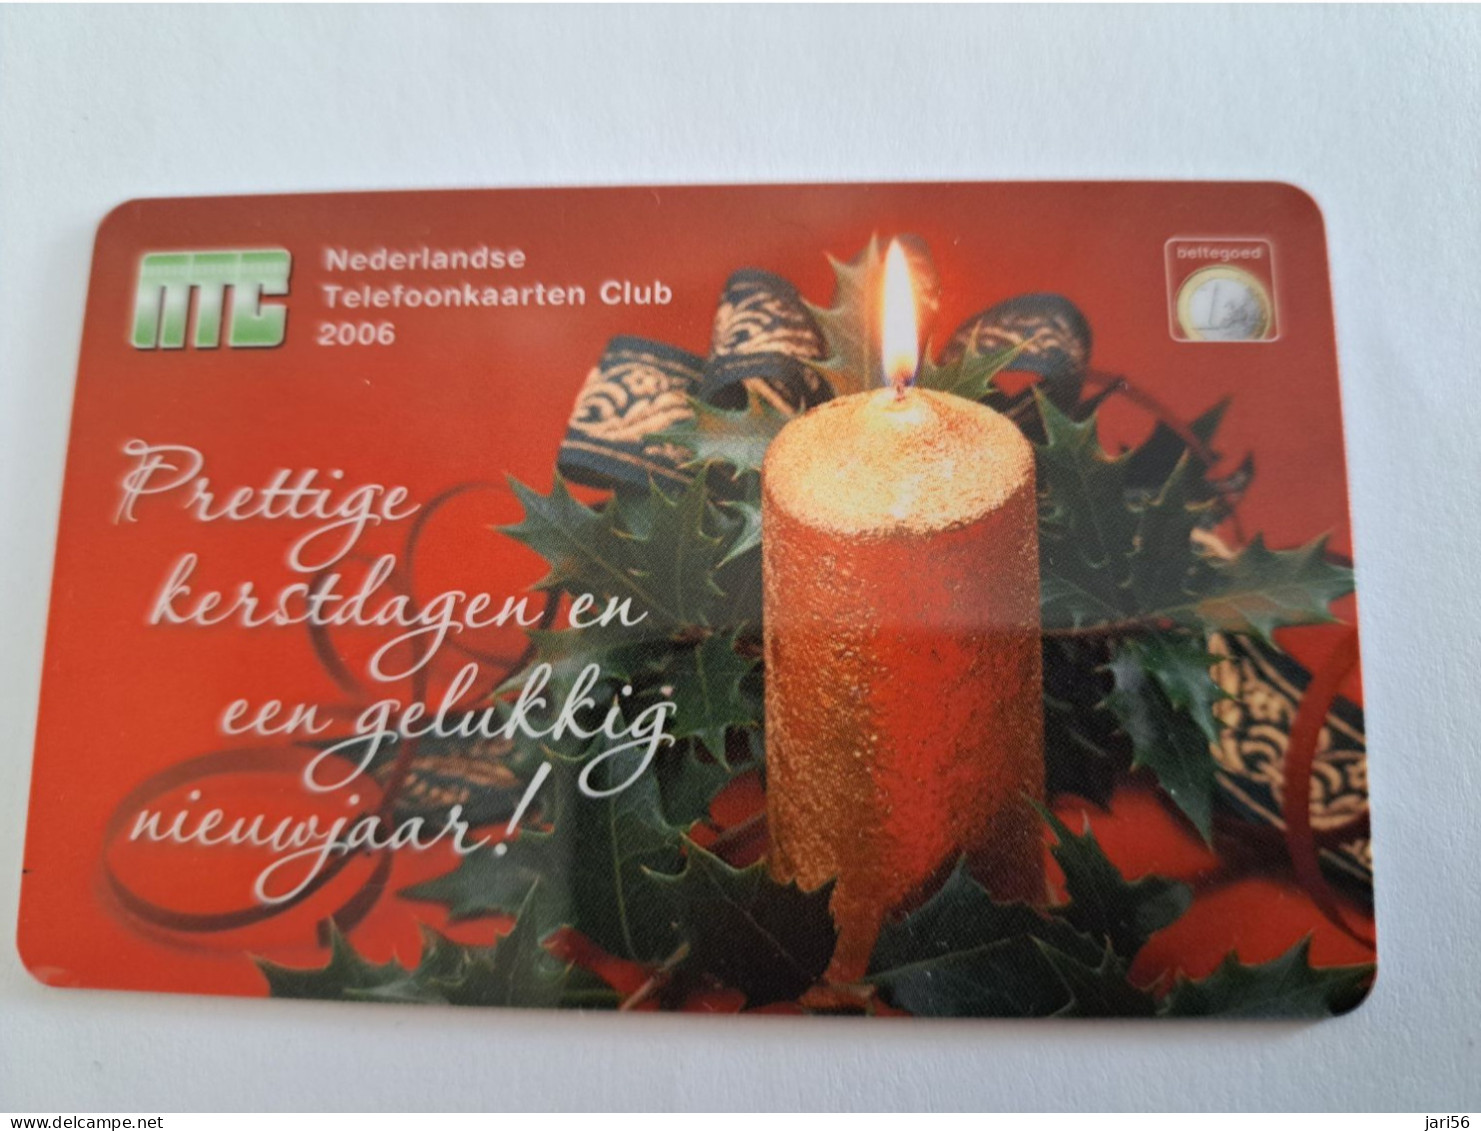 NETHERLANDS /  PREPAID/ NTC CLUB/ MEMBERCARD 2006/  €  1,-   - MINT  CARD  ** 13952** - Públicas